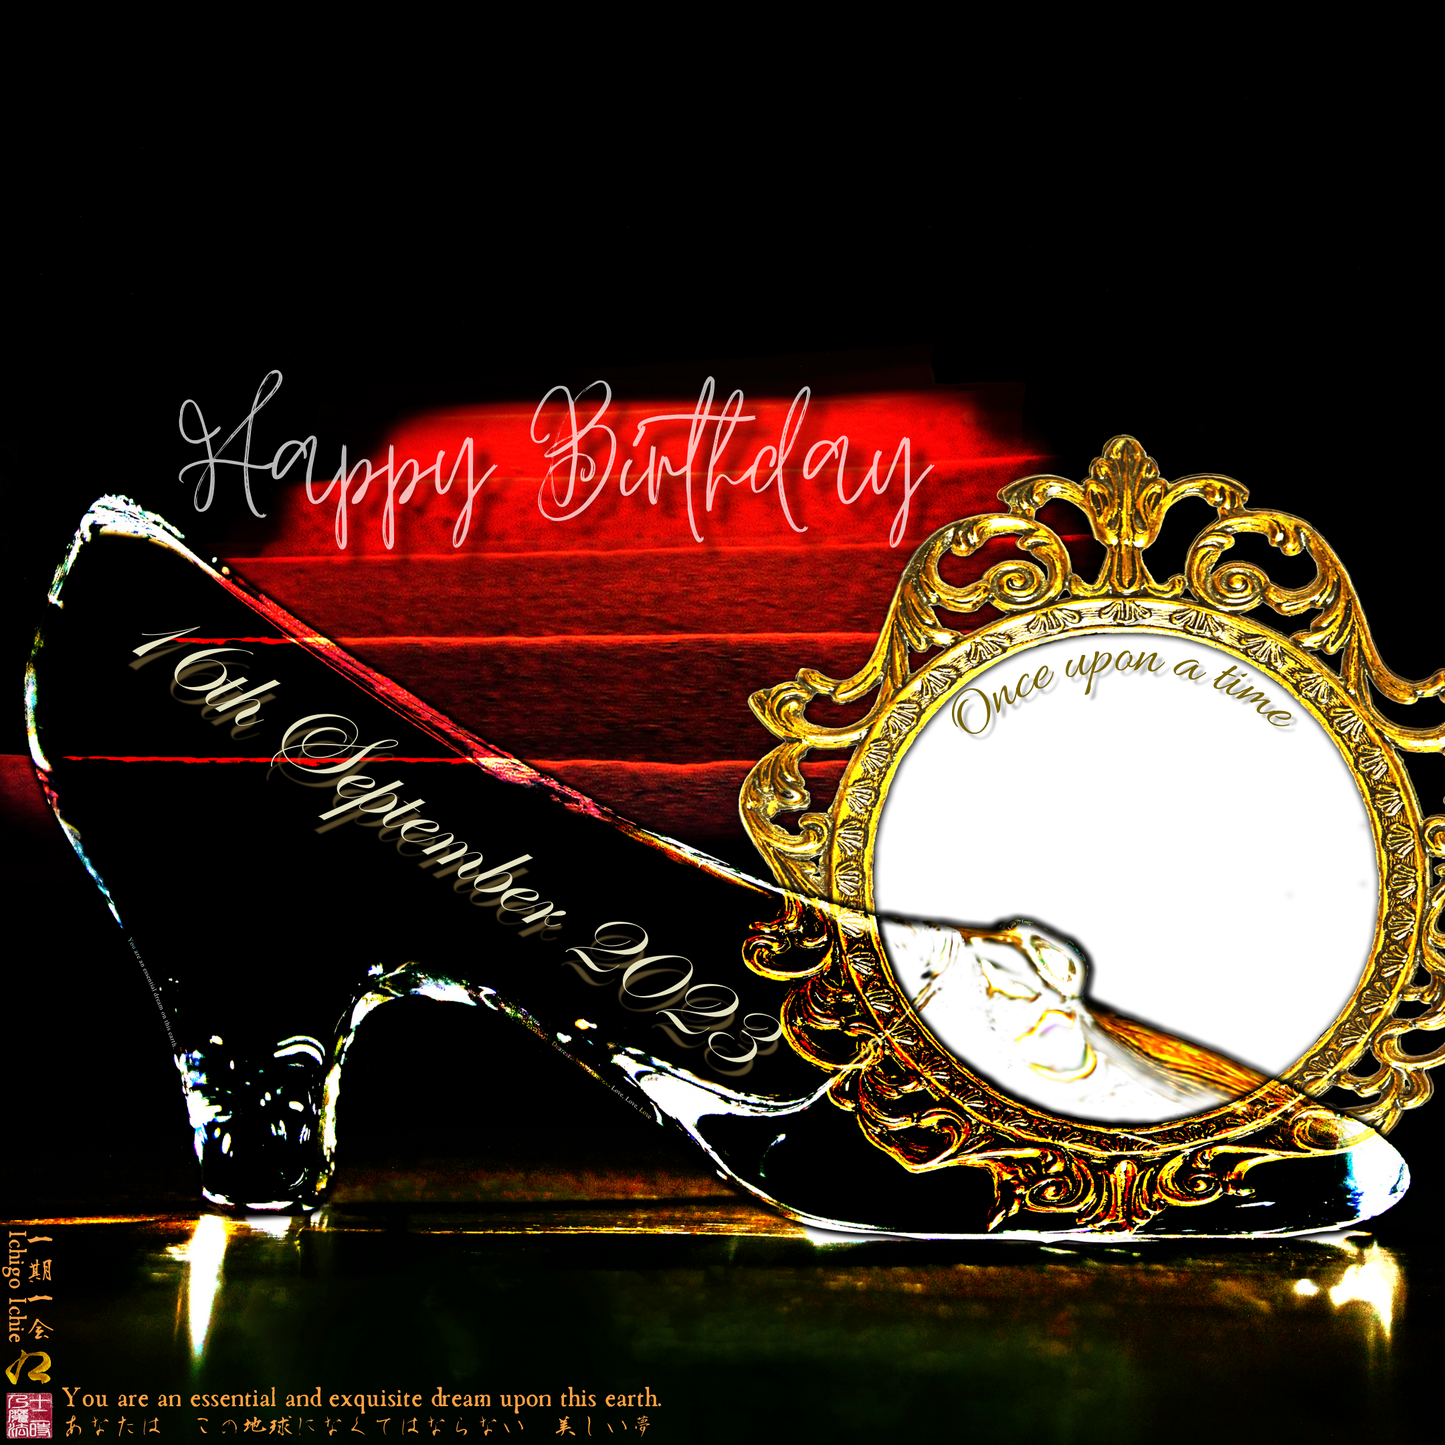 Happy Birthday Glass Slipper "Ichigo Ichie" 16th September 2023 the Right (1-of-1) NFT Art